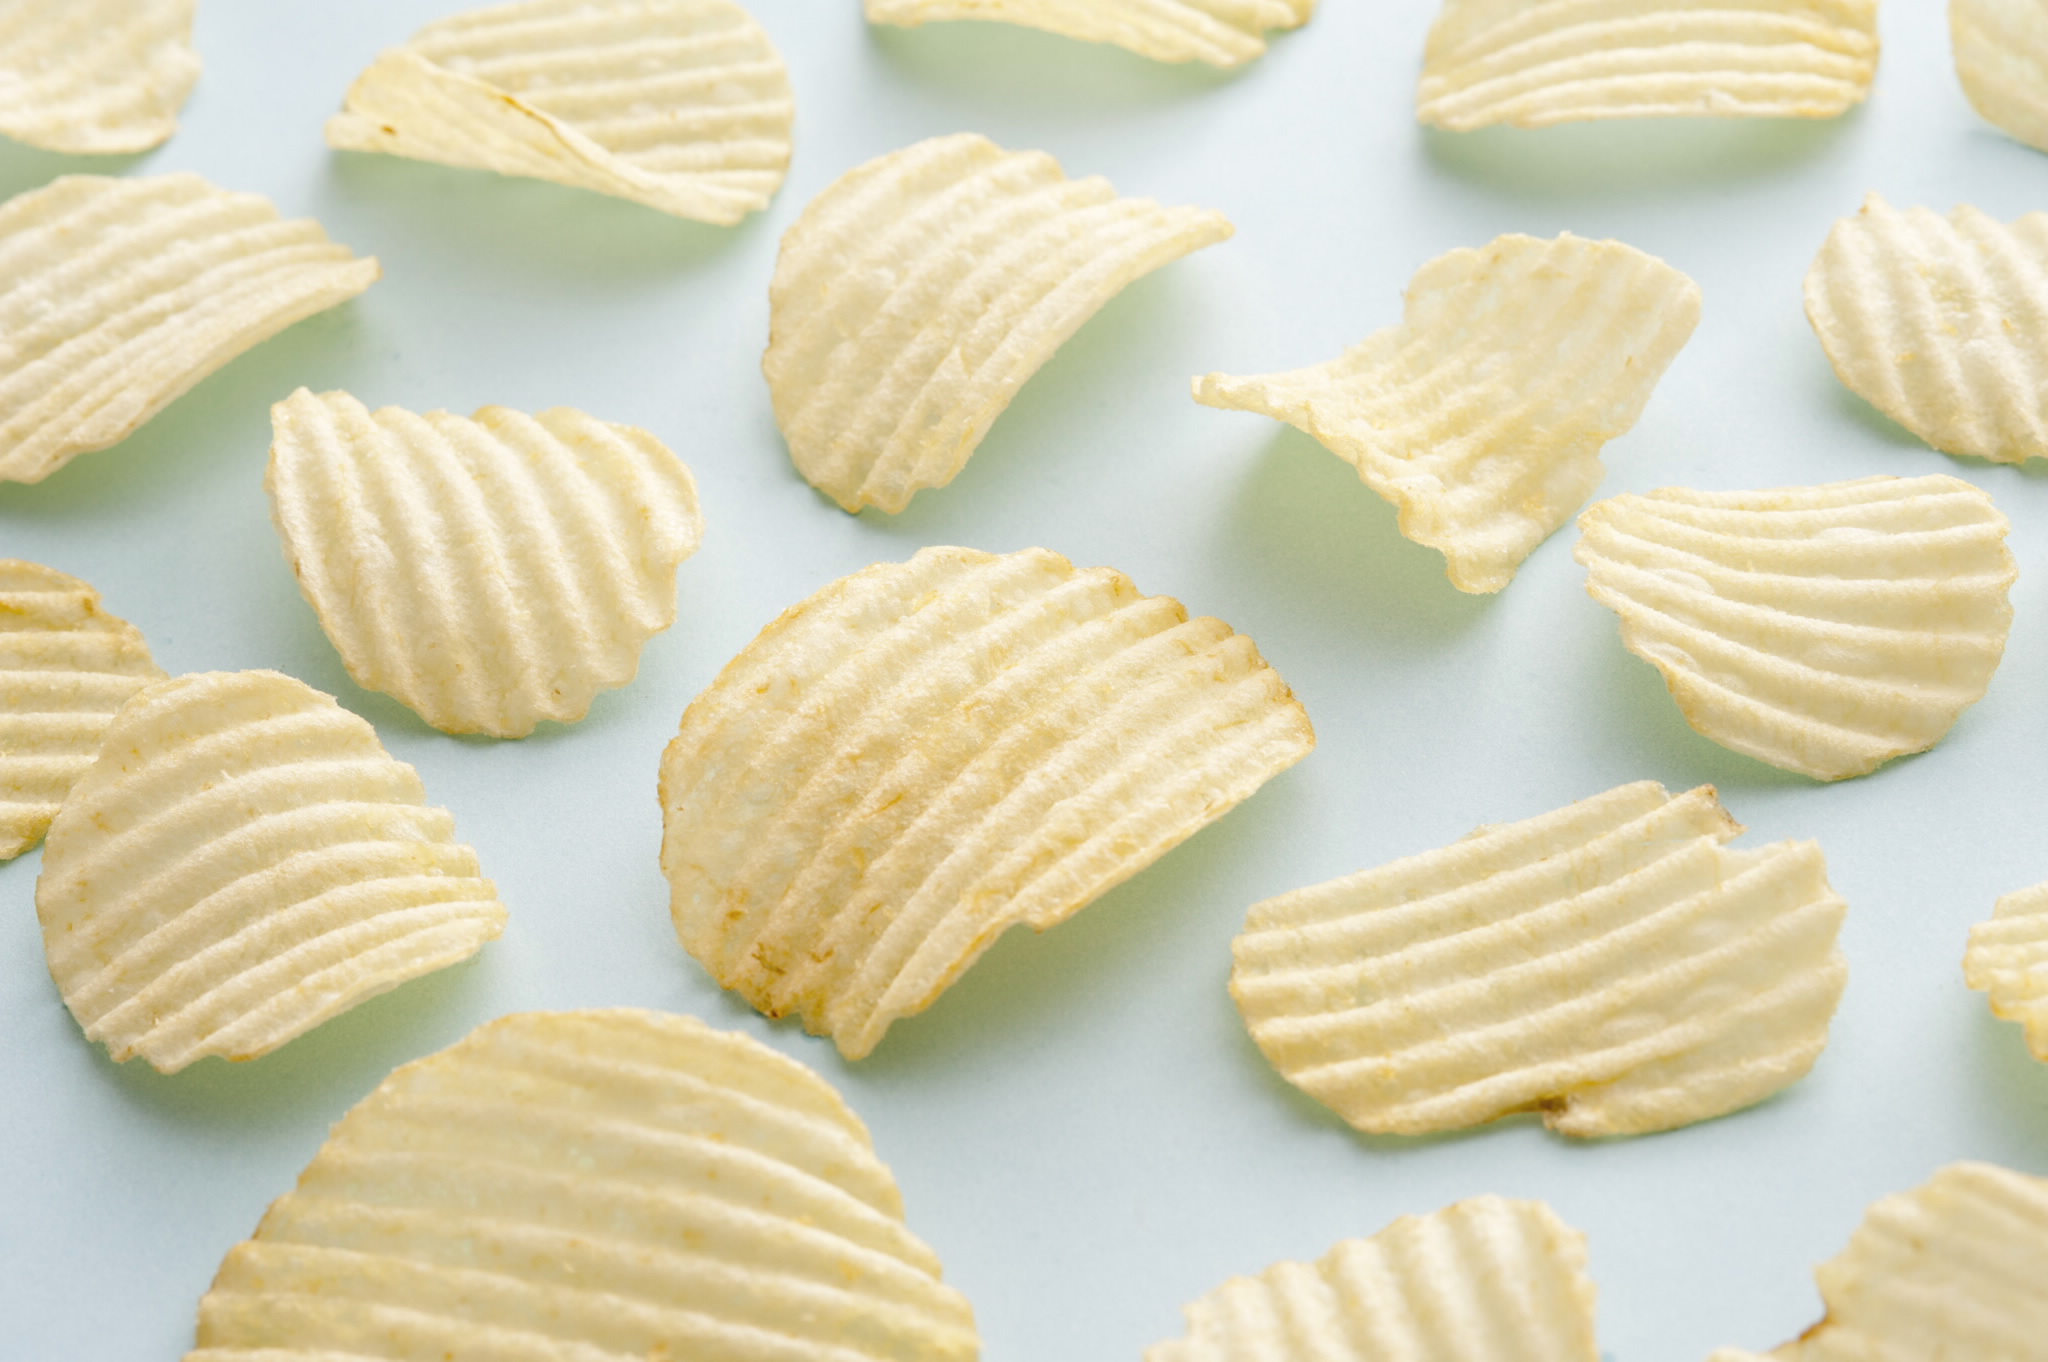 scattered potato chips